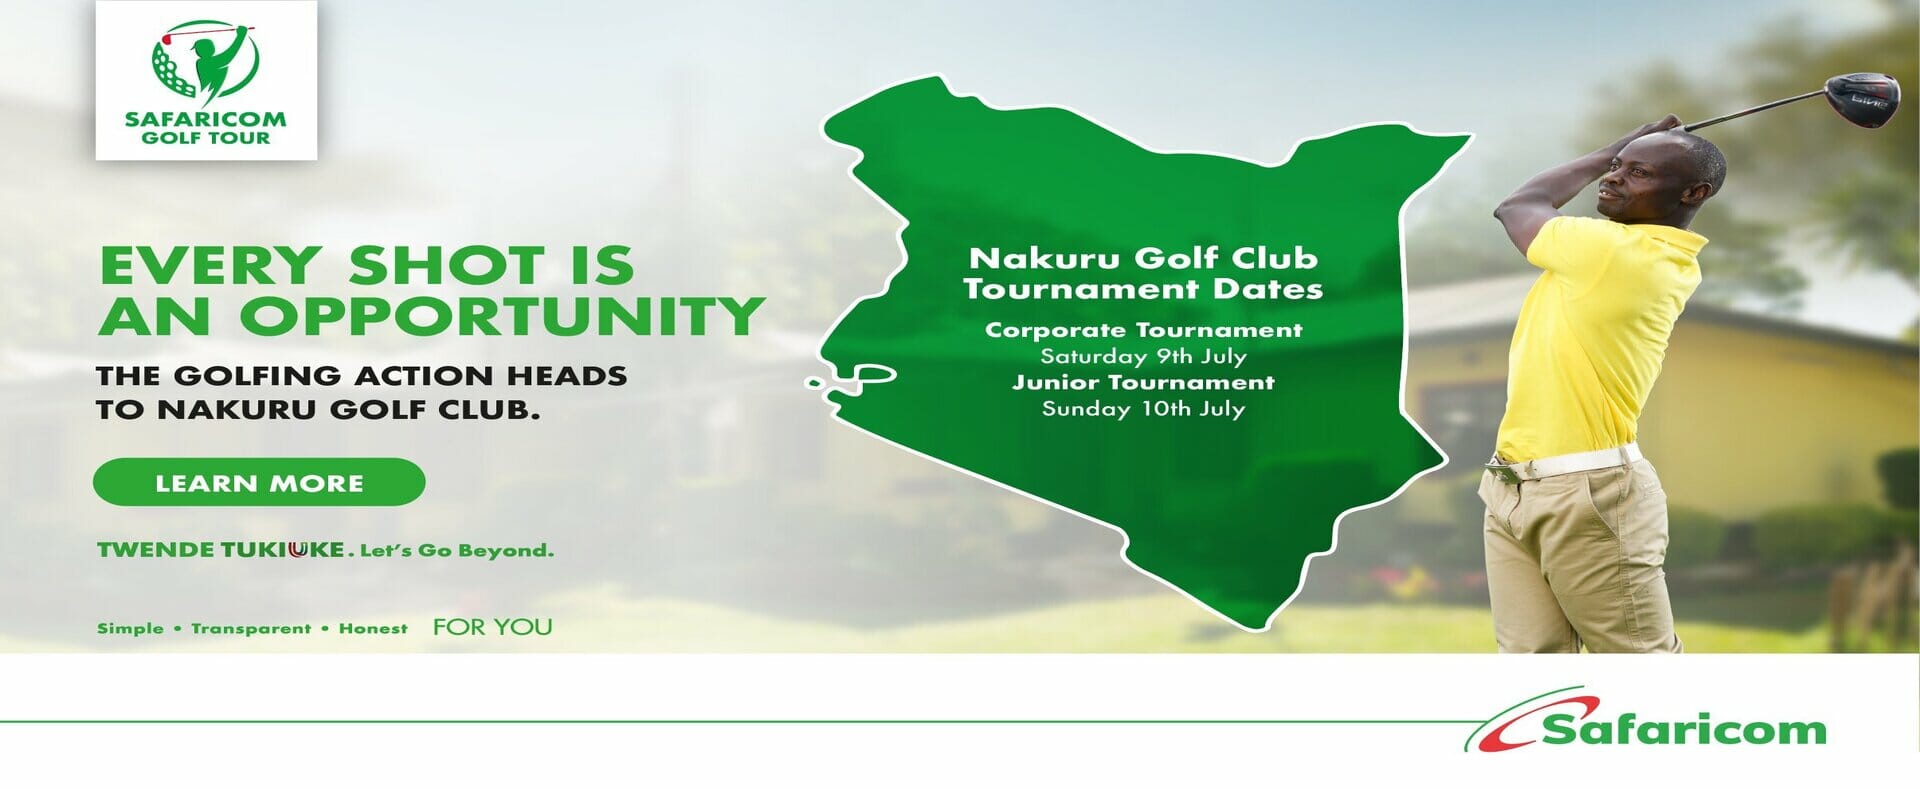 Safaricom Golf Tour Resumes with Nakuru Tourney